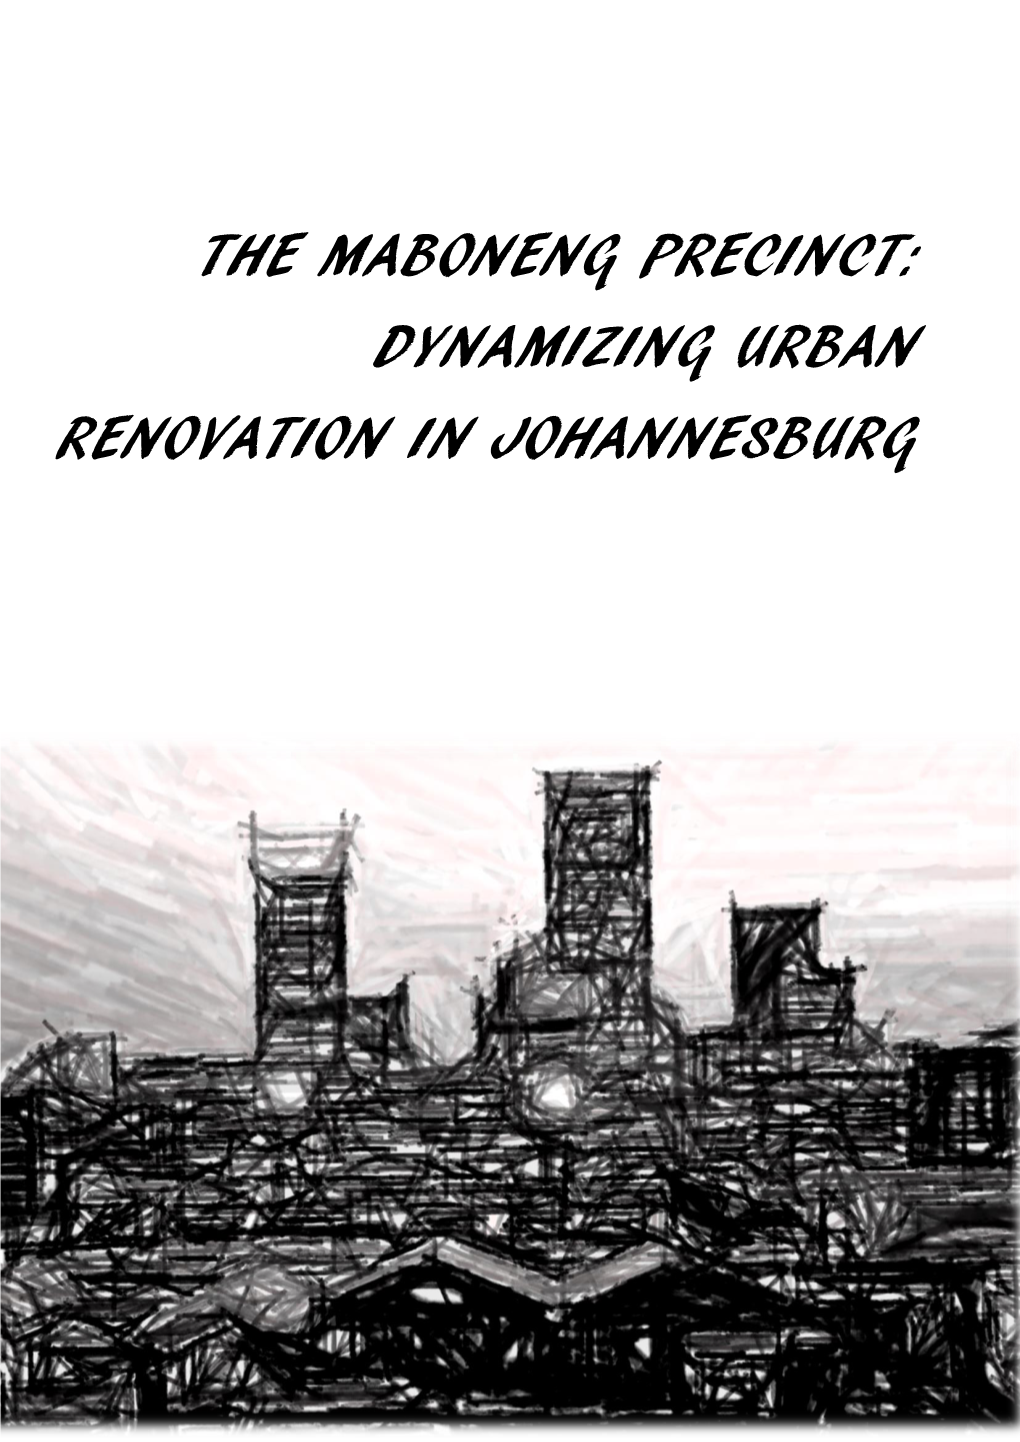 The Maboneng Precinct: Dynamizing Urban Renovation in Johannesburg